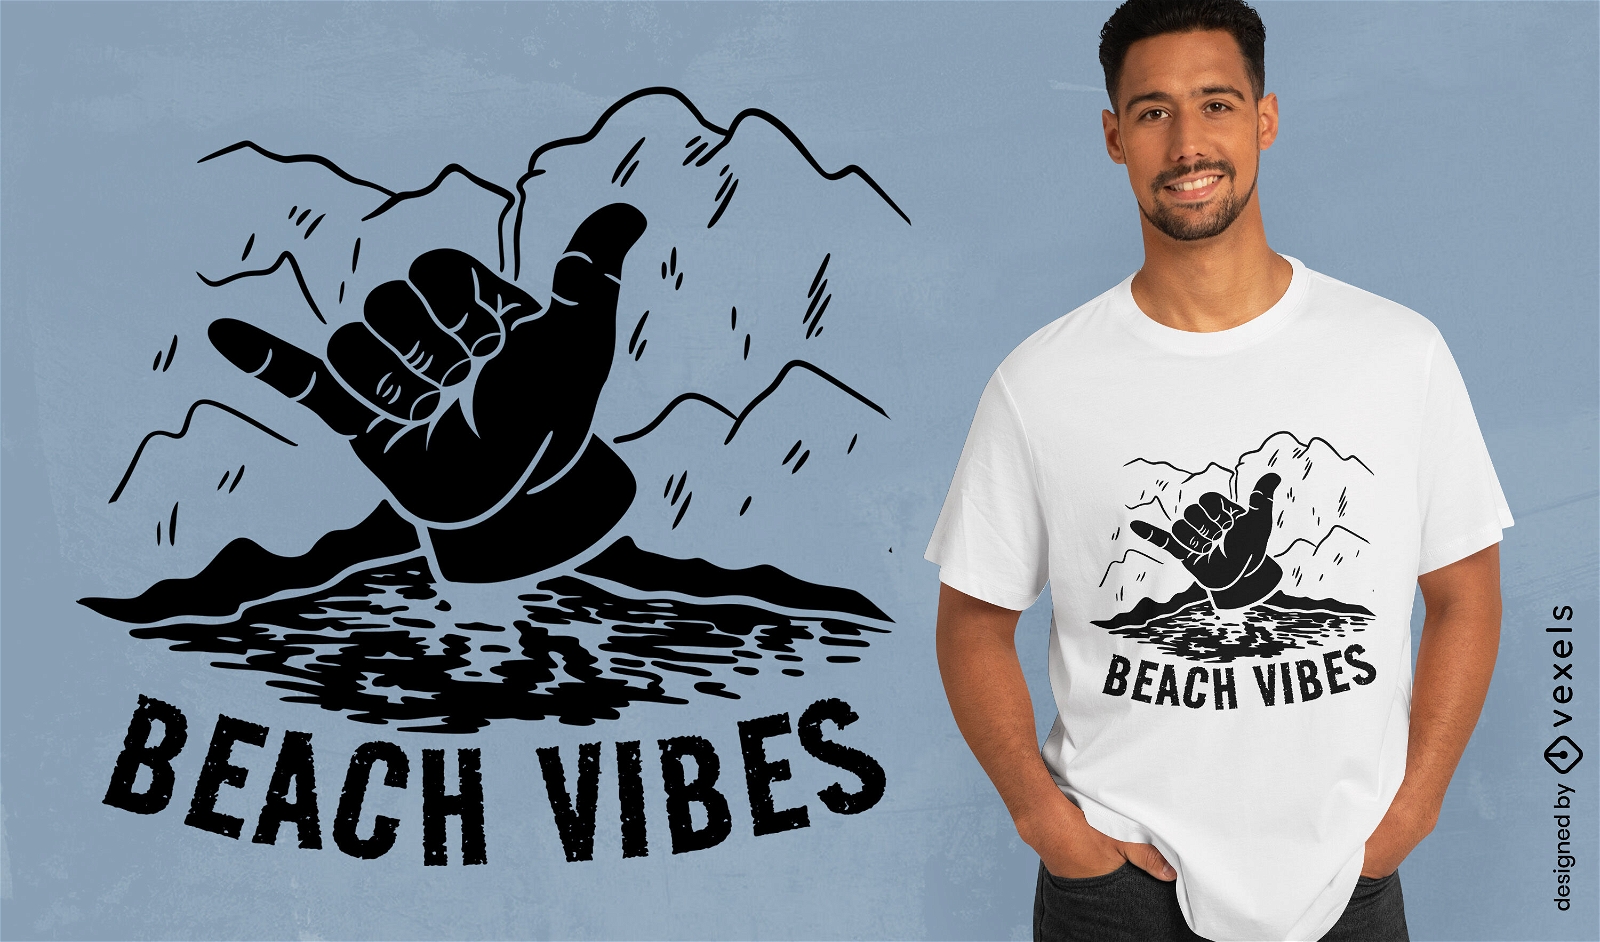 Beach vibes shaka hand t-shirt design